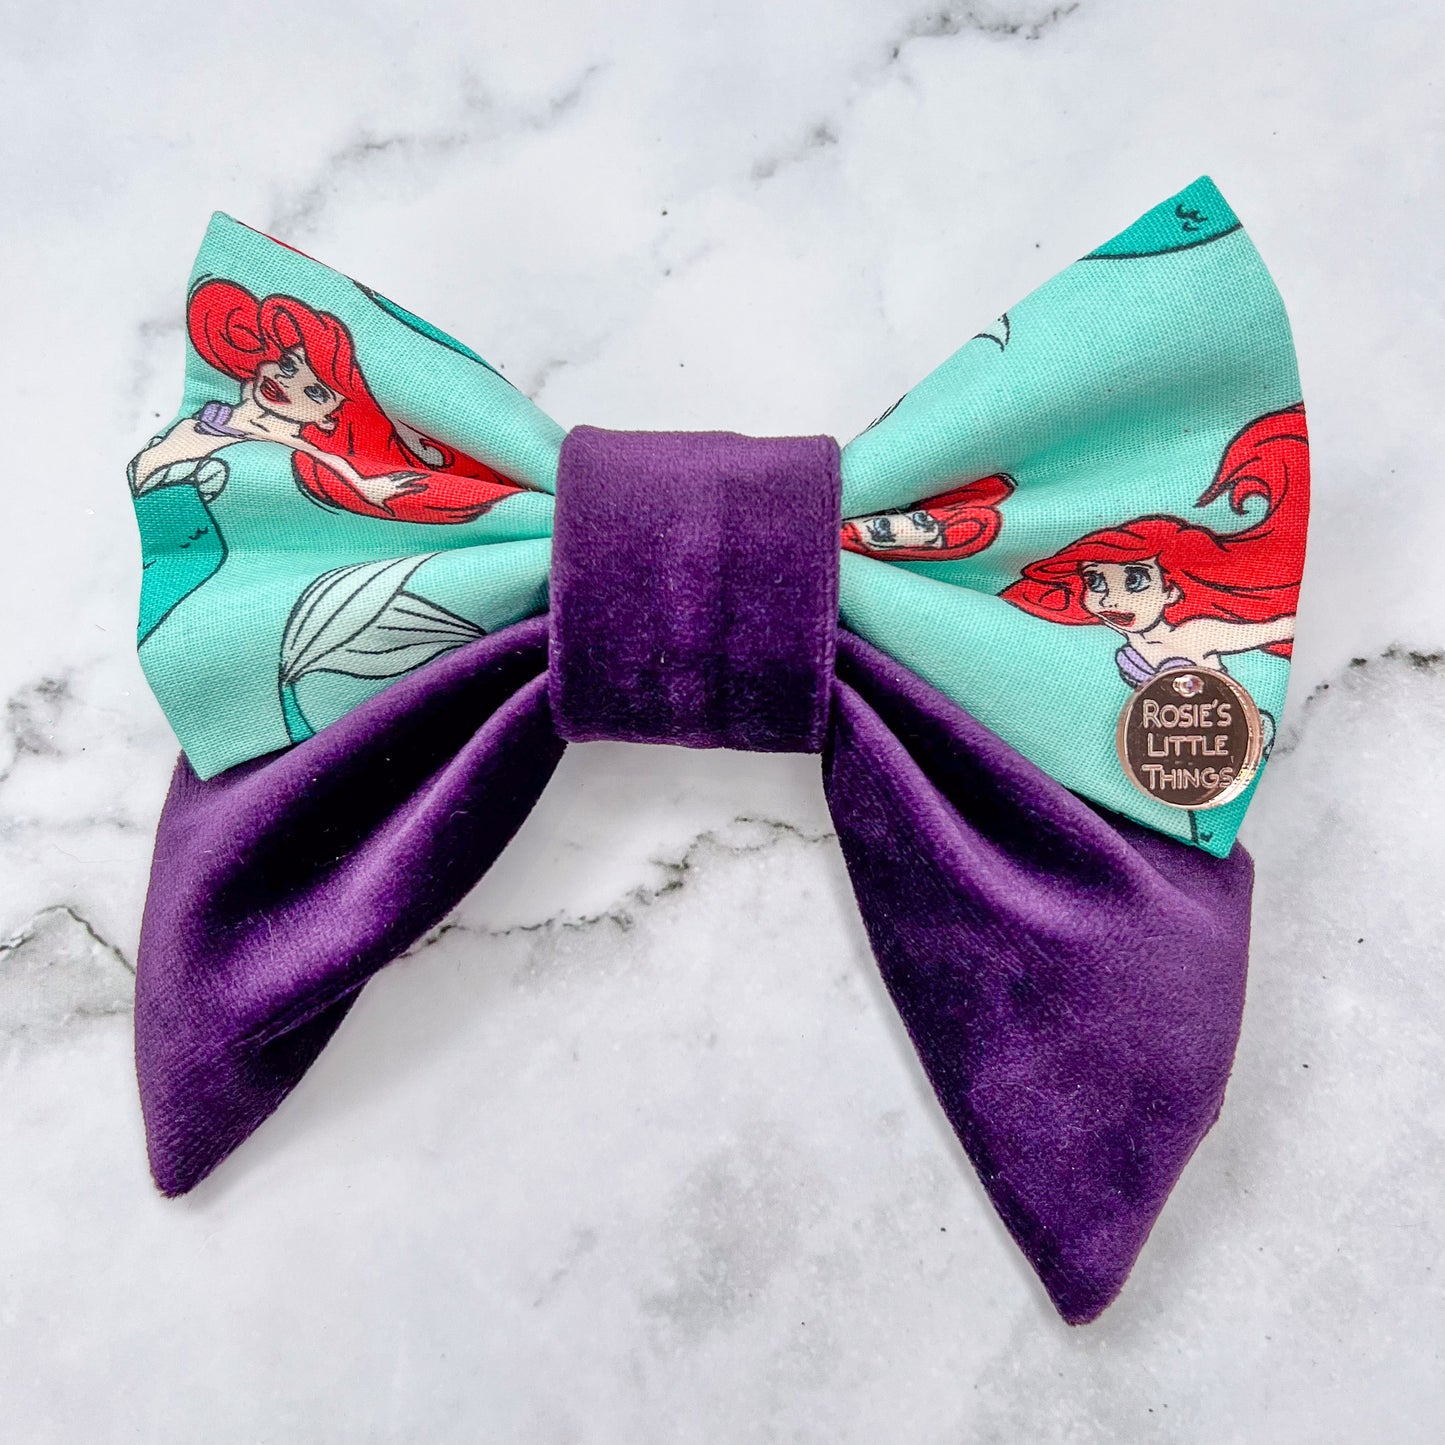 Ariel on Aquamarine Blue - Sailor Bow